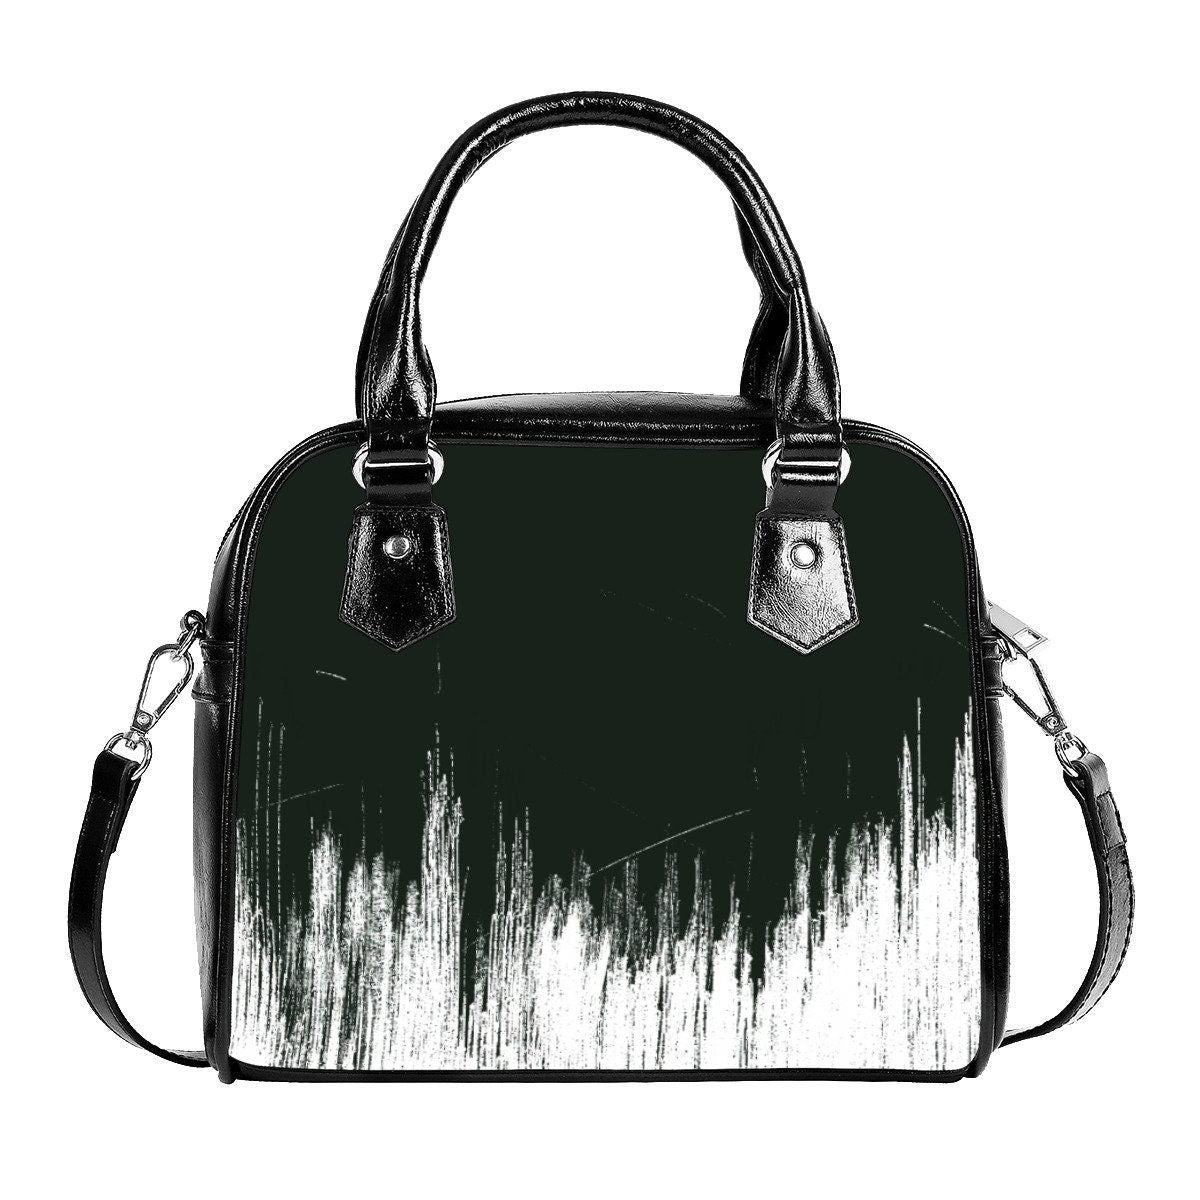 Edgy Black Bag, Black Handbags, Punk Rock Style, Abstract Bag, Women's Bags, Women's Purse, Gothic Style Bag, Artistic Bag